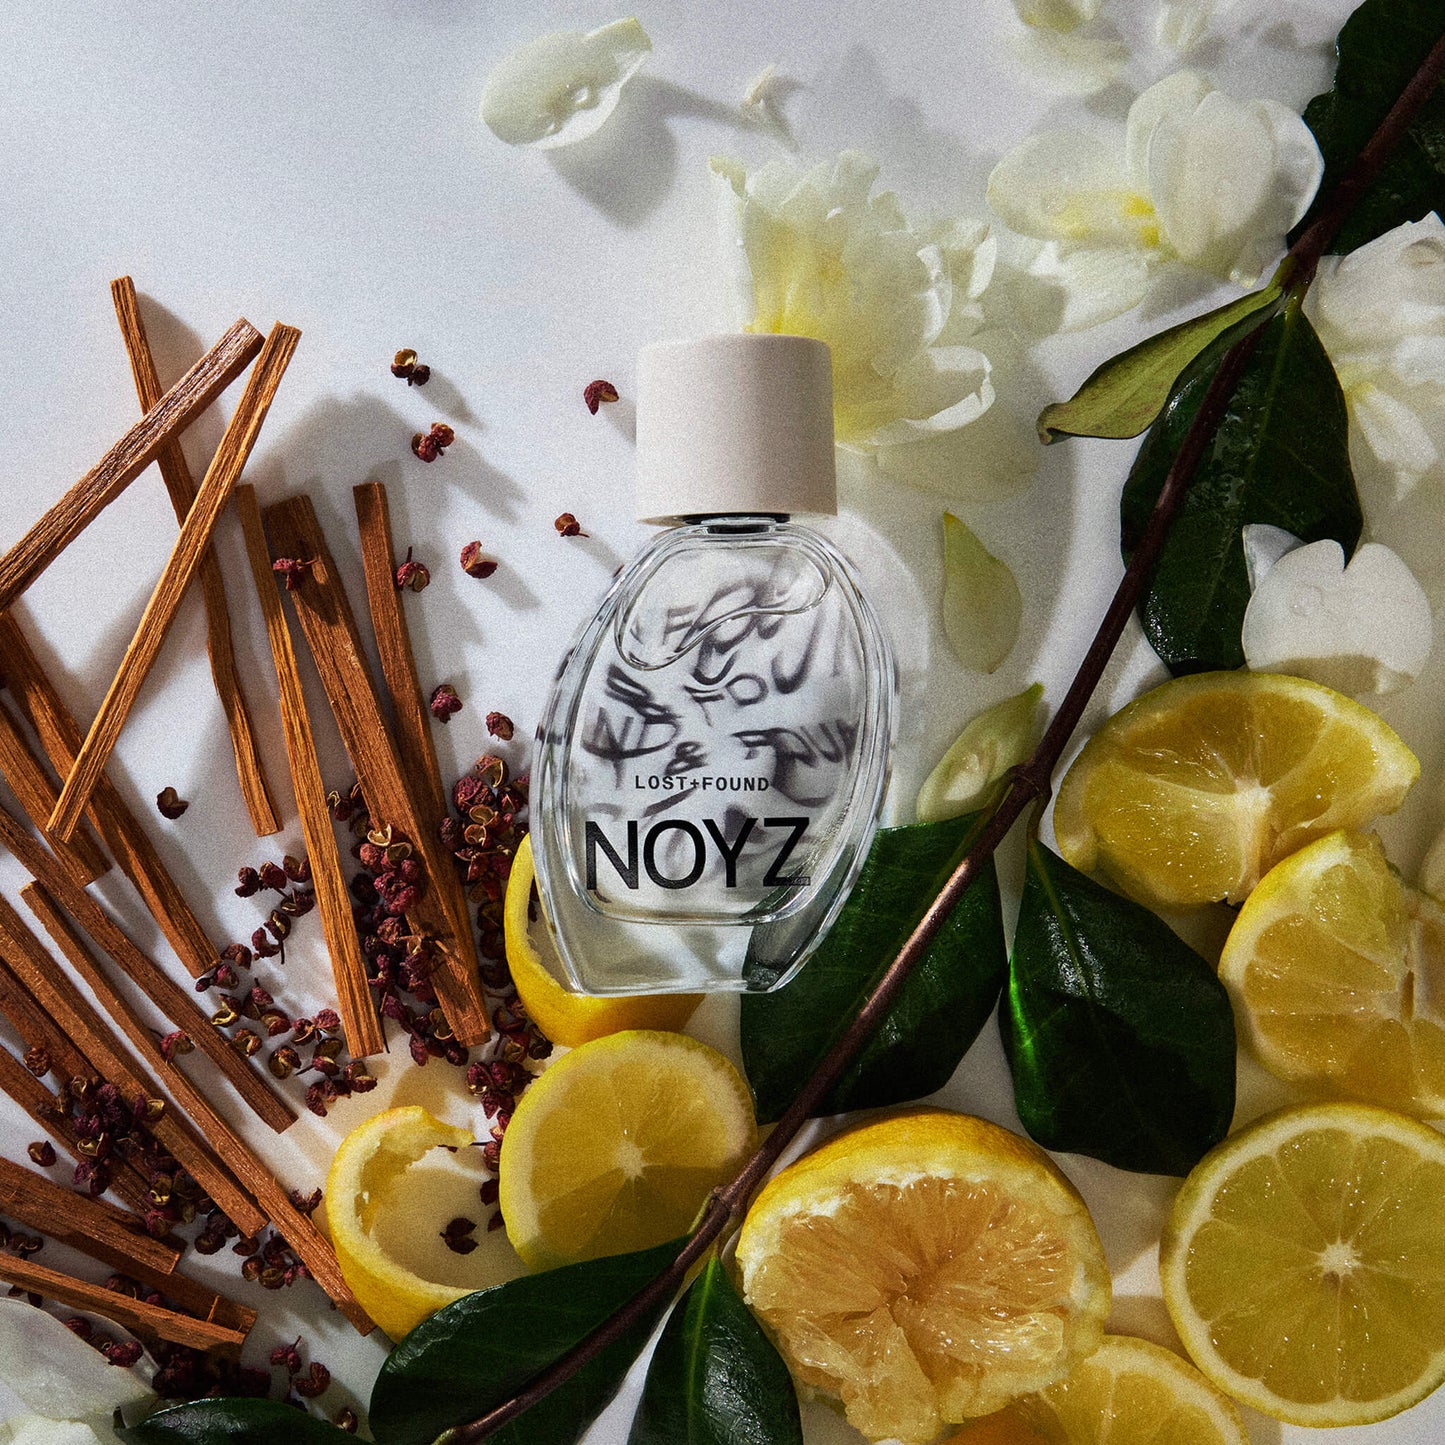 A bottle of Noyz perfume sits amidst cedarwood, italian lemon slices and jasmine flowers